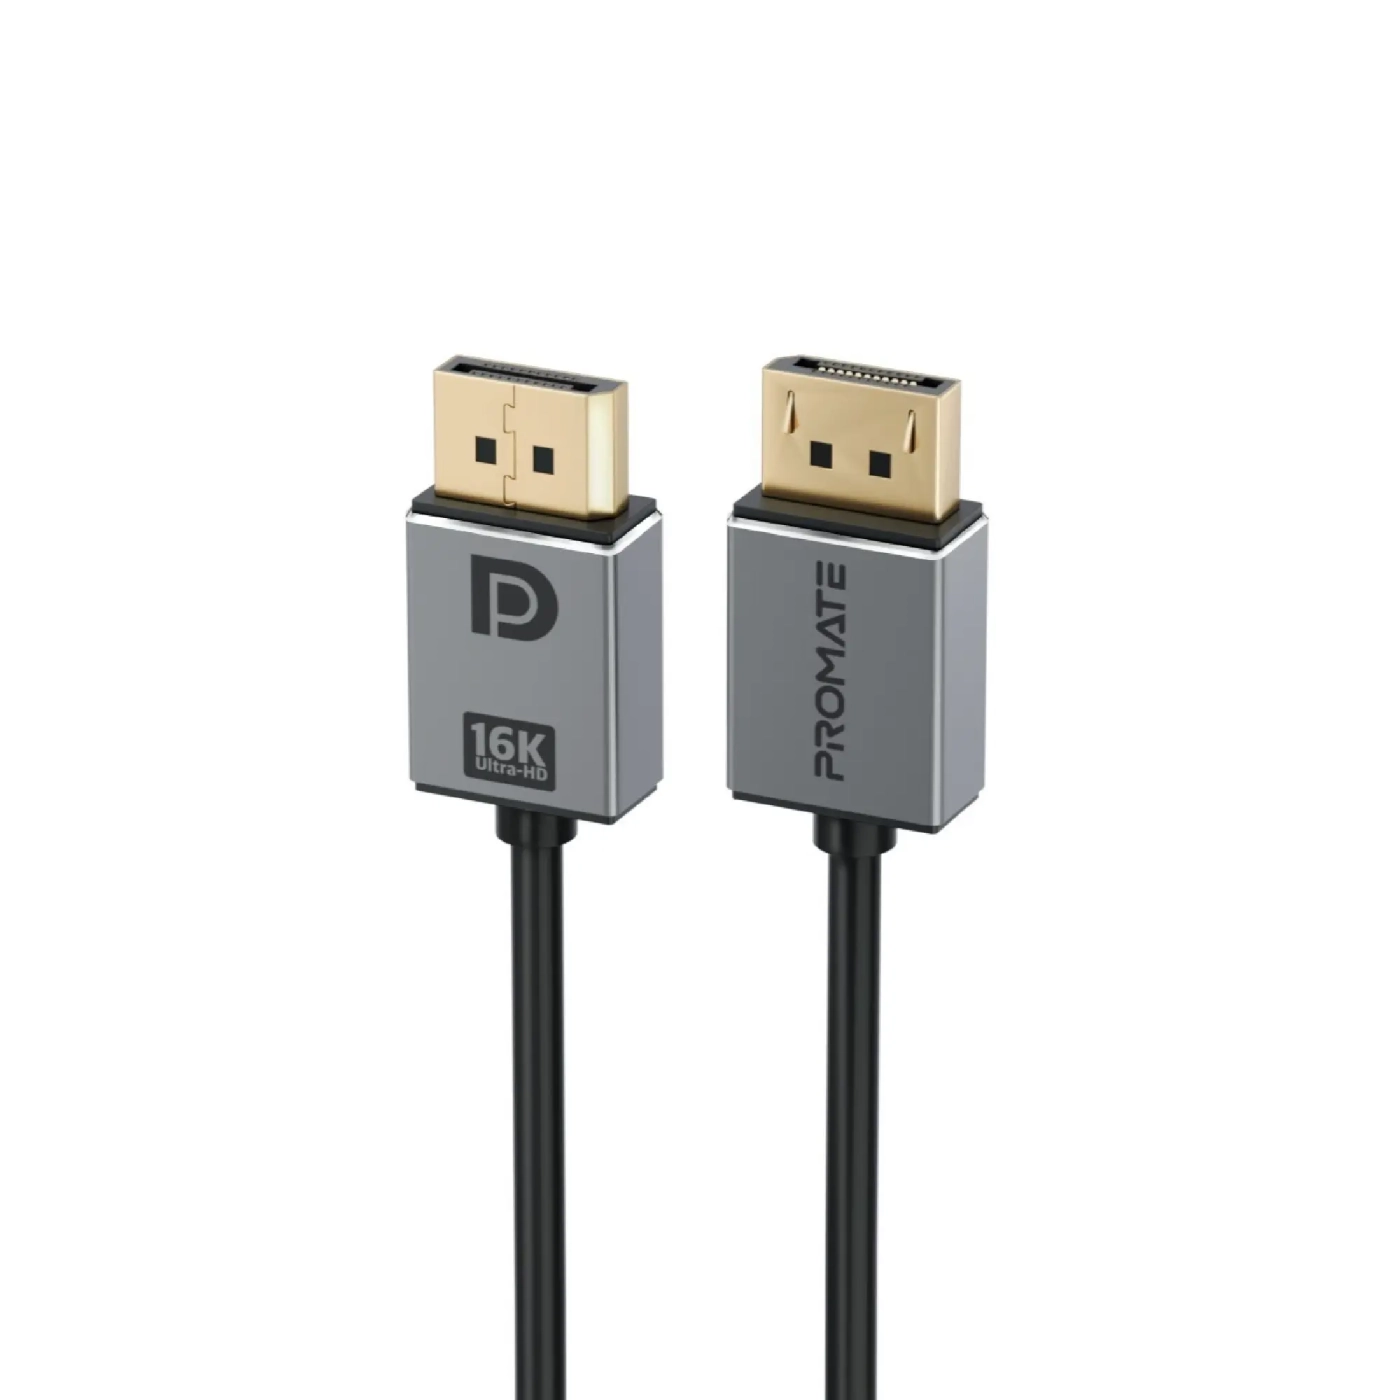 Купить Кабель Promate DPLink-16K, DisplayPort v2.0, gold plated, 2 м (dplink-16k.black) - фото 1